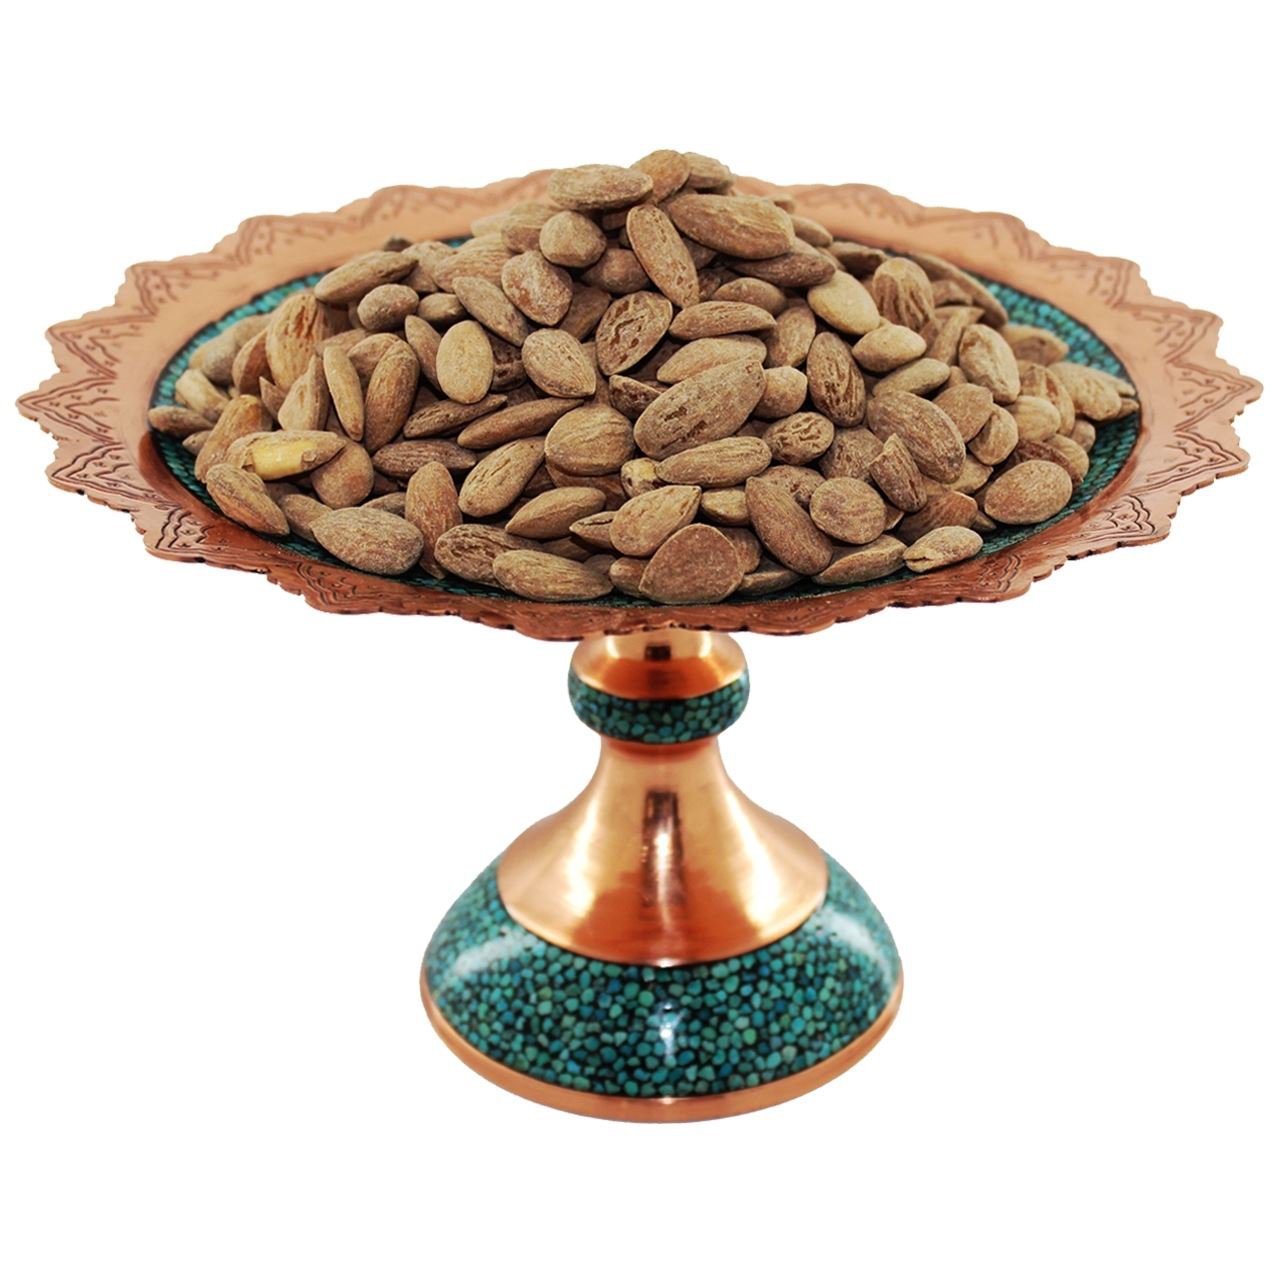 Iranian almond nuts